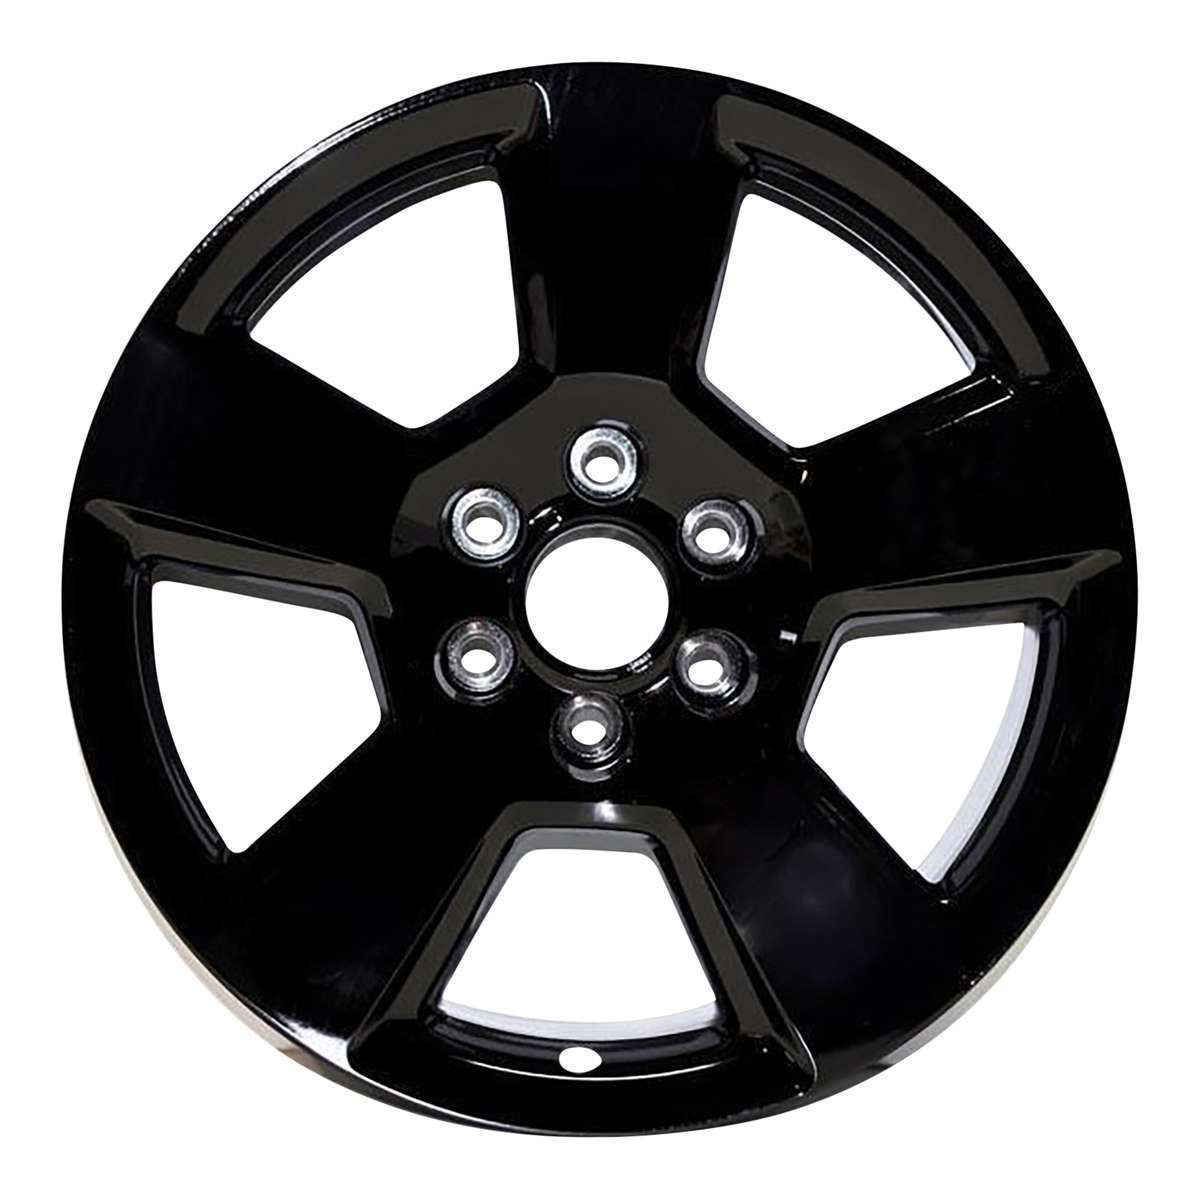 2014 Chevrolet Silverado 1500 New 20" Replacement Wheel Rim RW5652GB